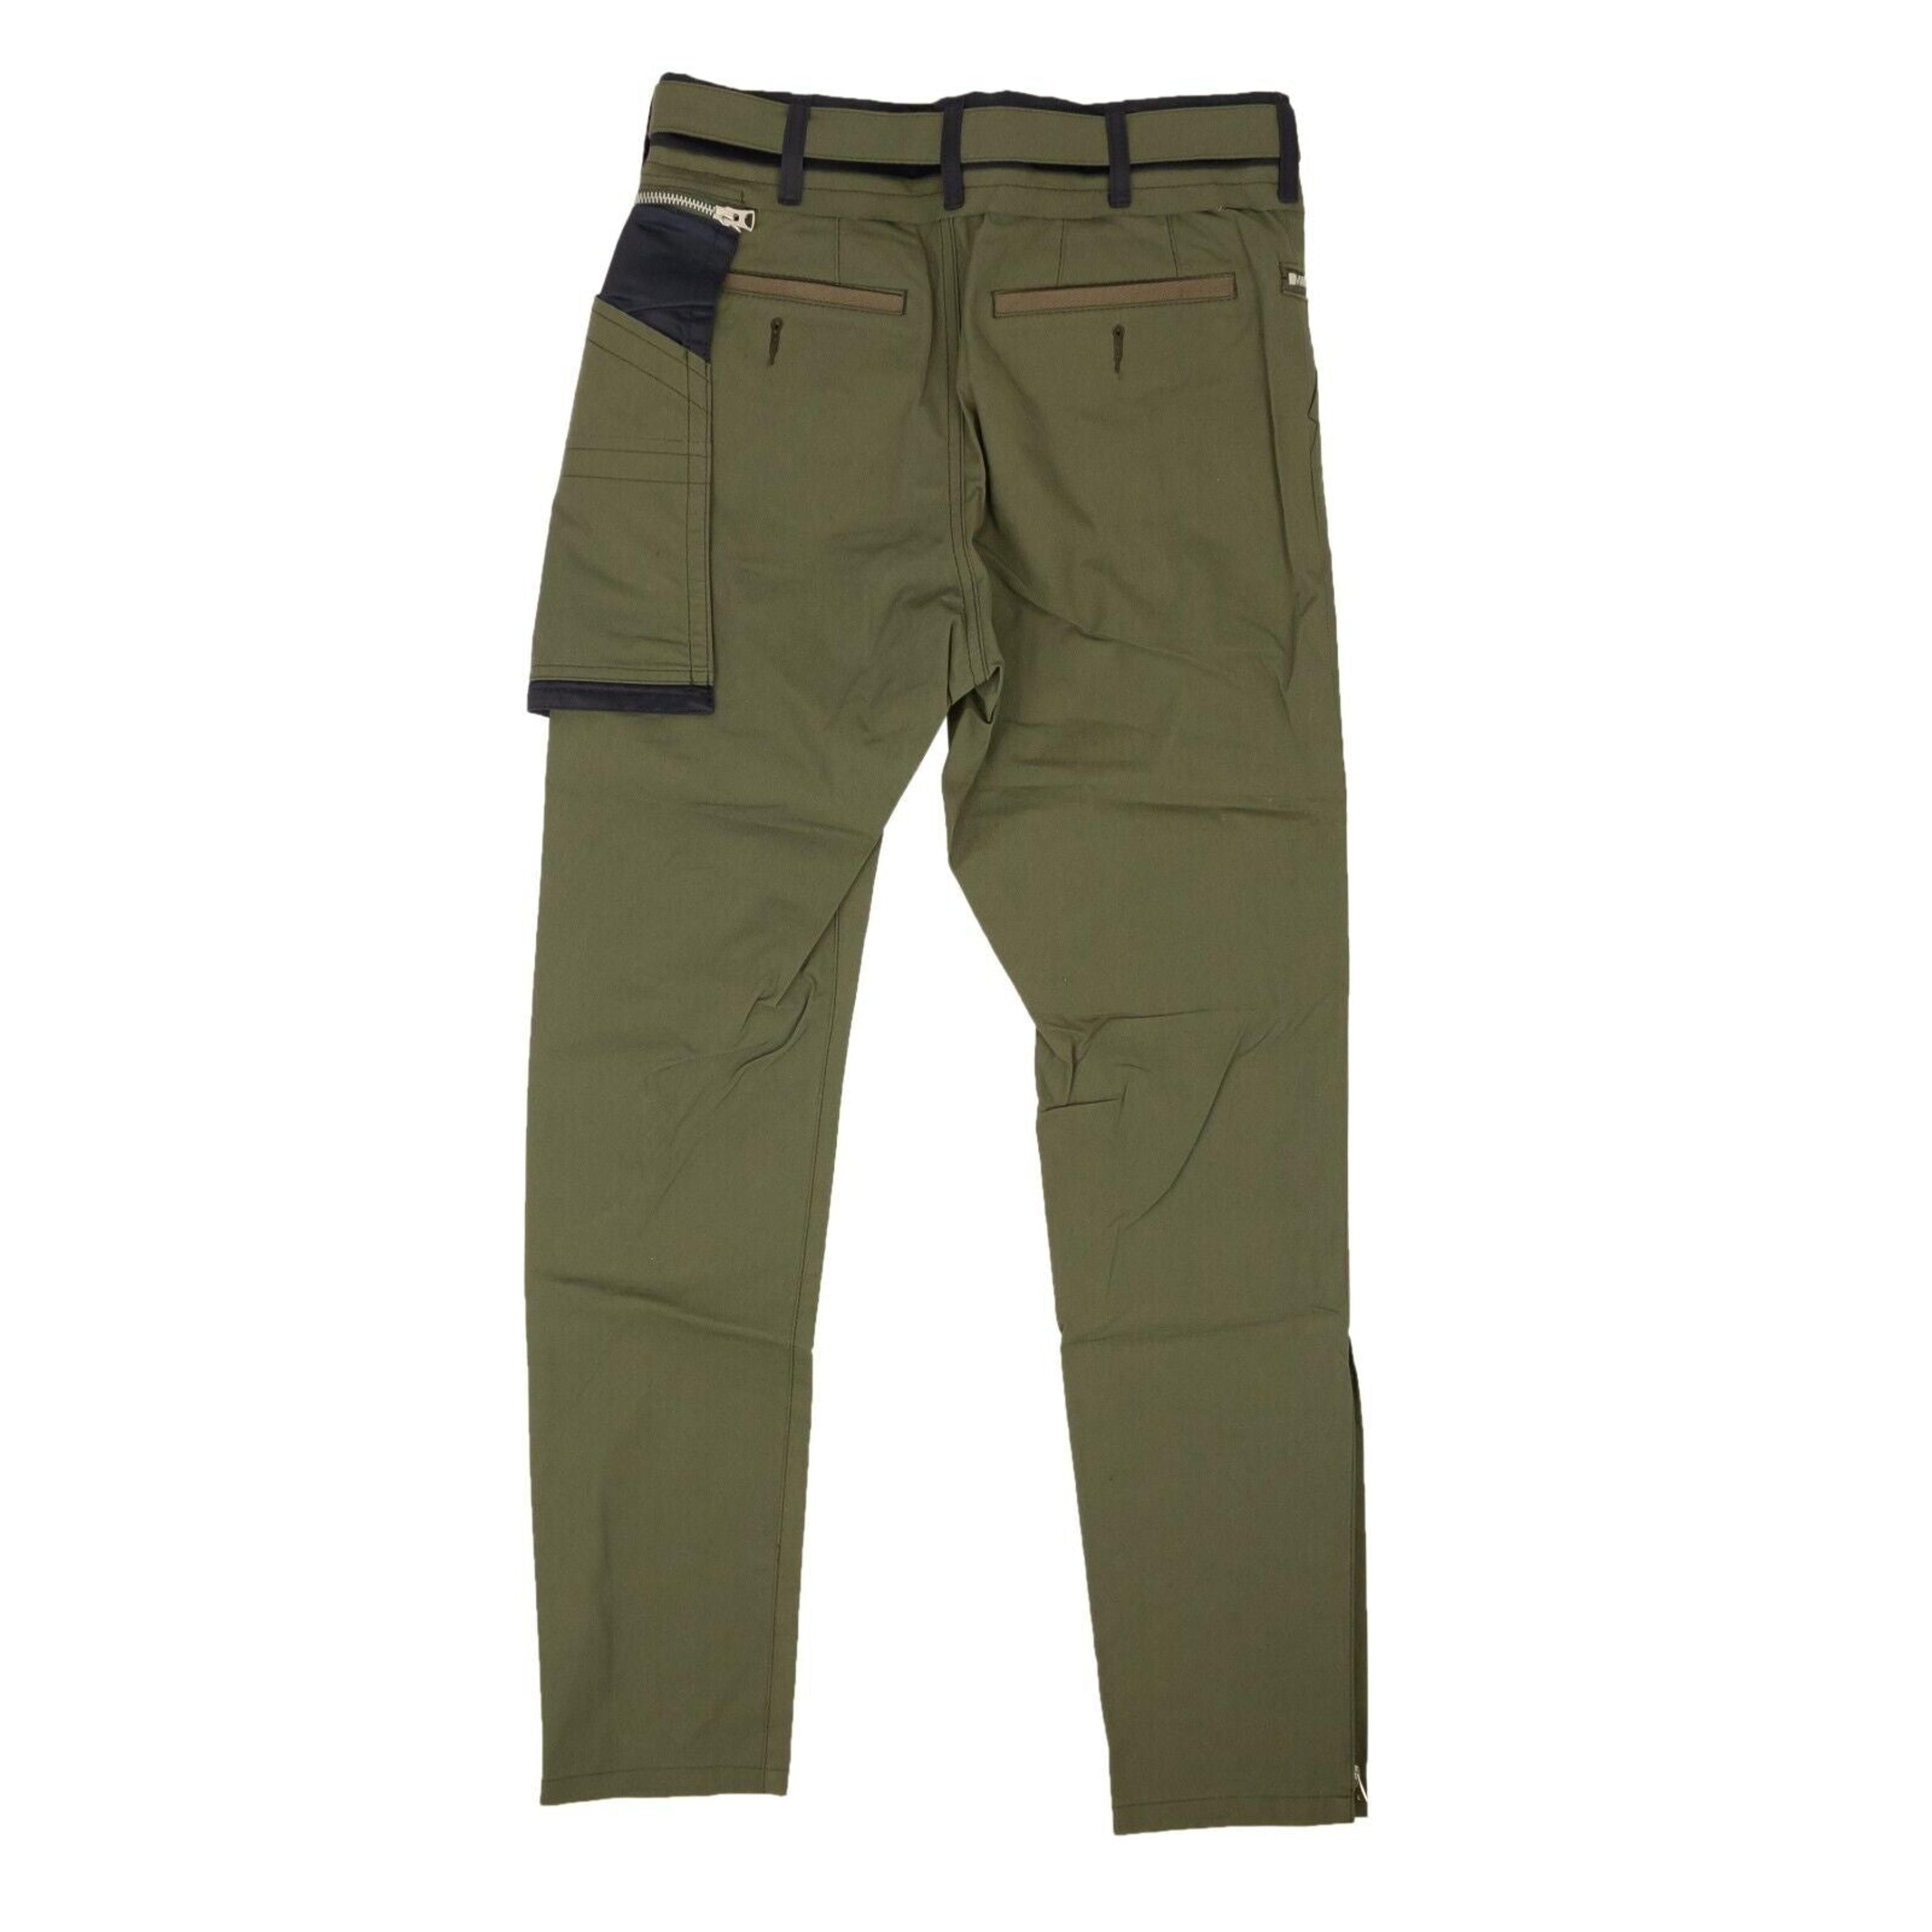 Alternate View 2 of Dark Khaki Green Cotton Zip Pocket Cargo Pants